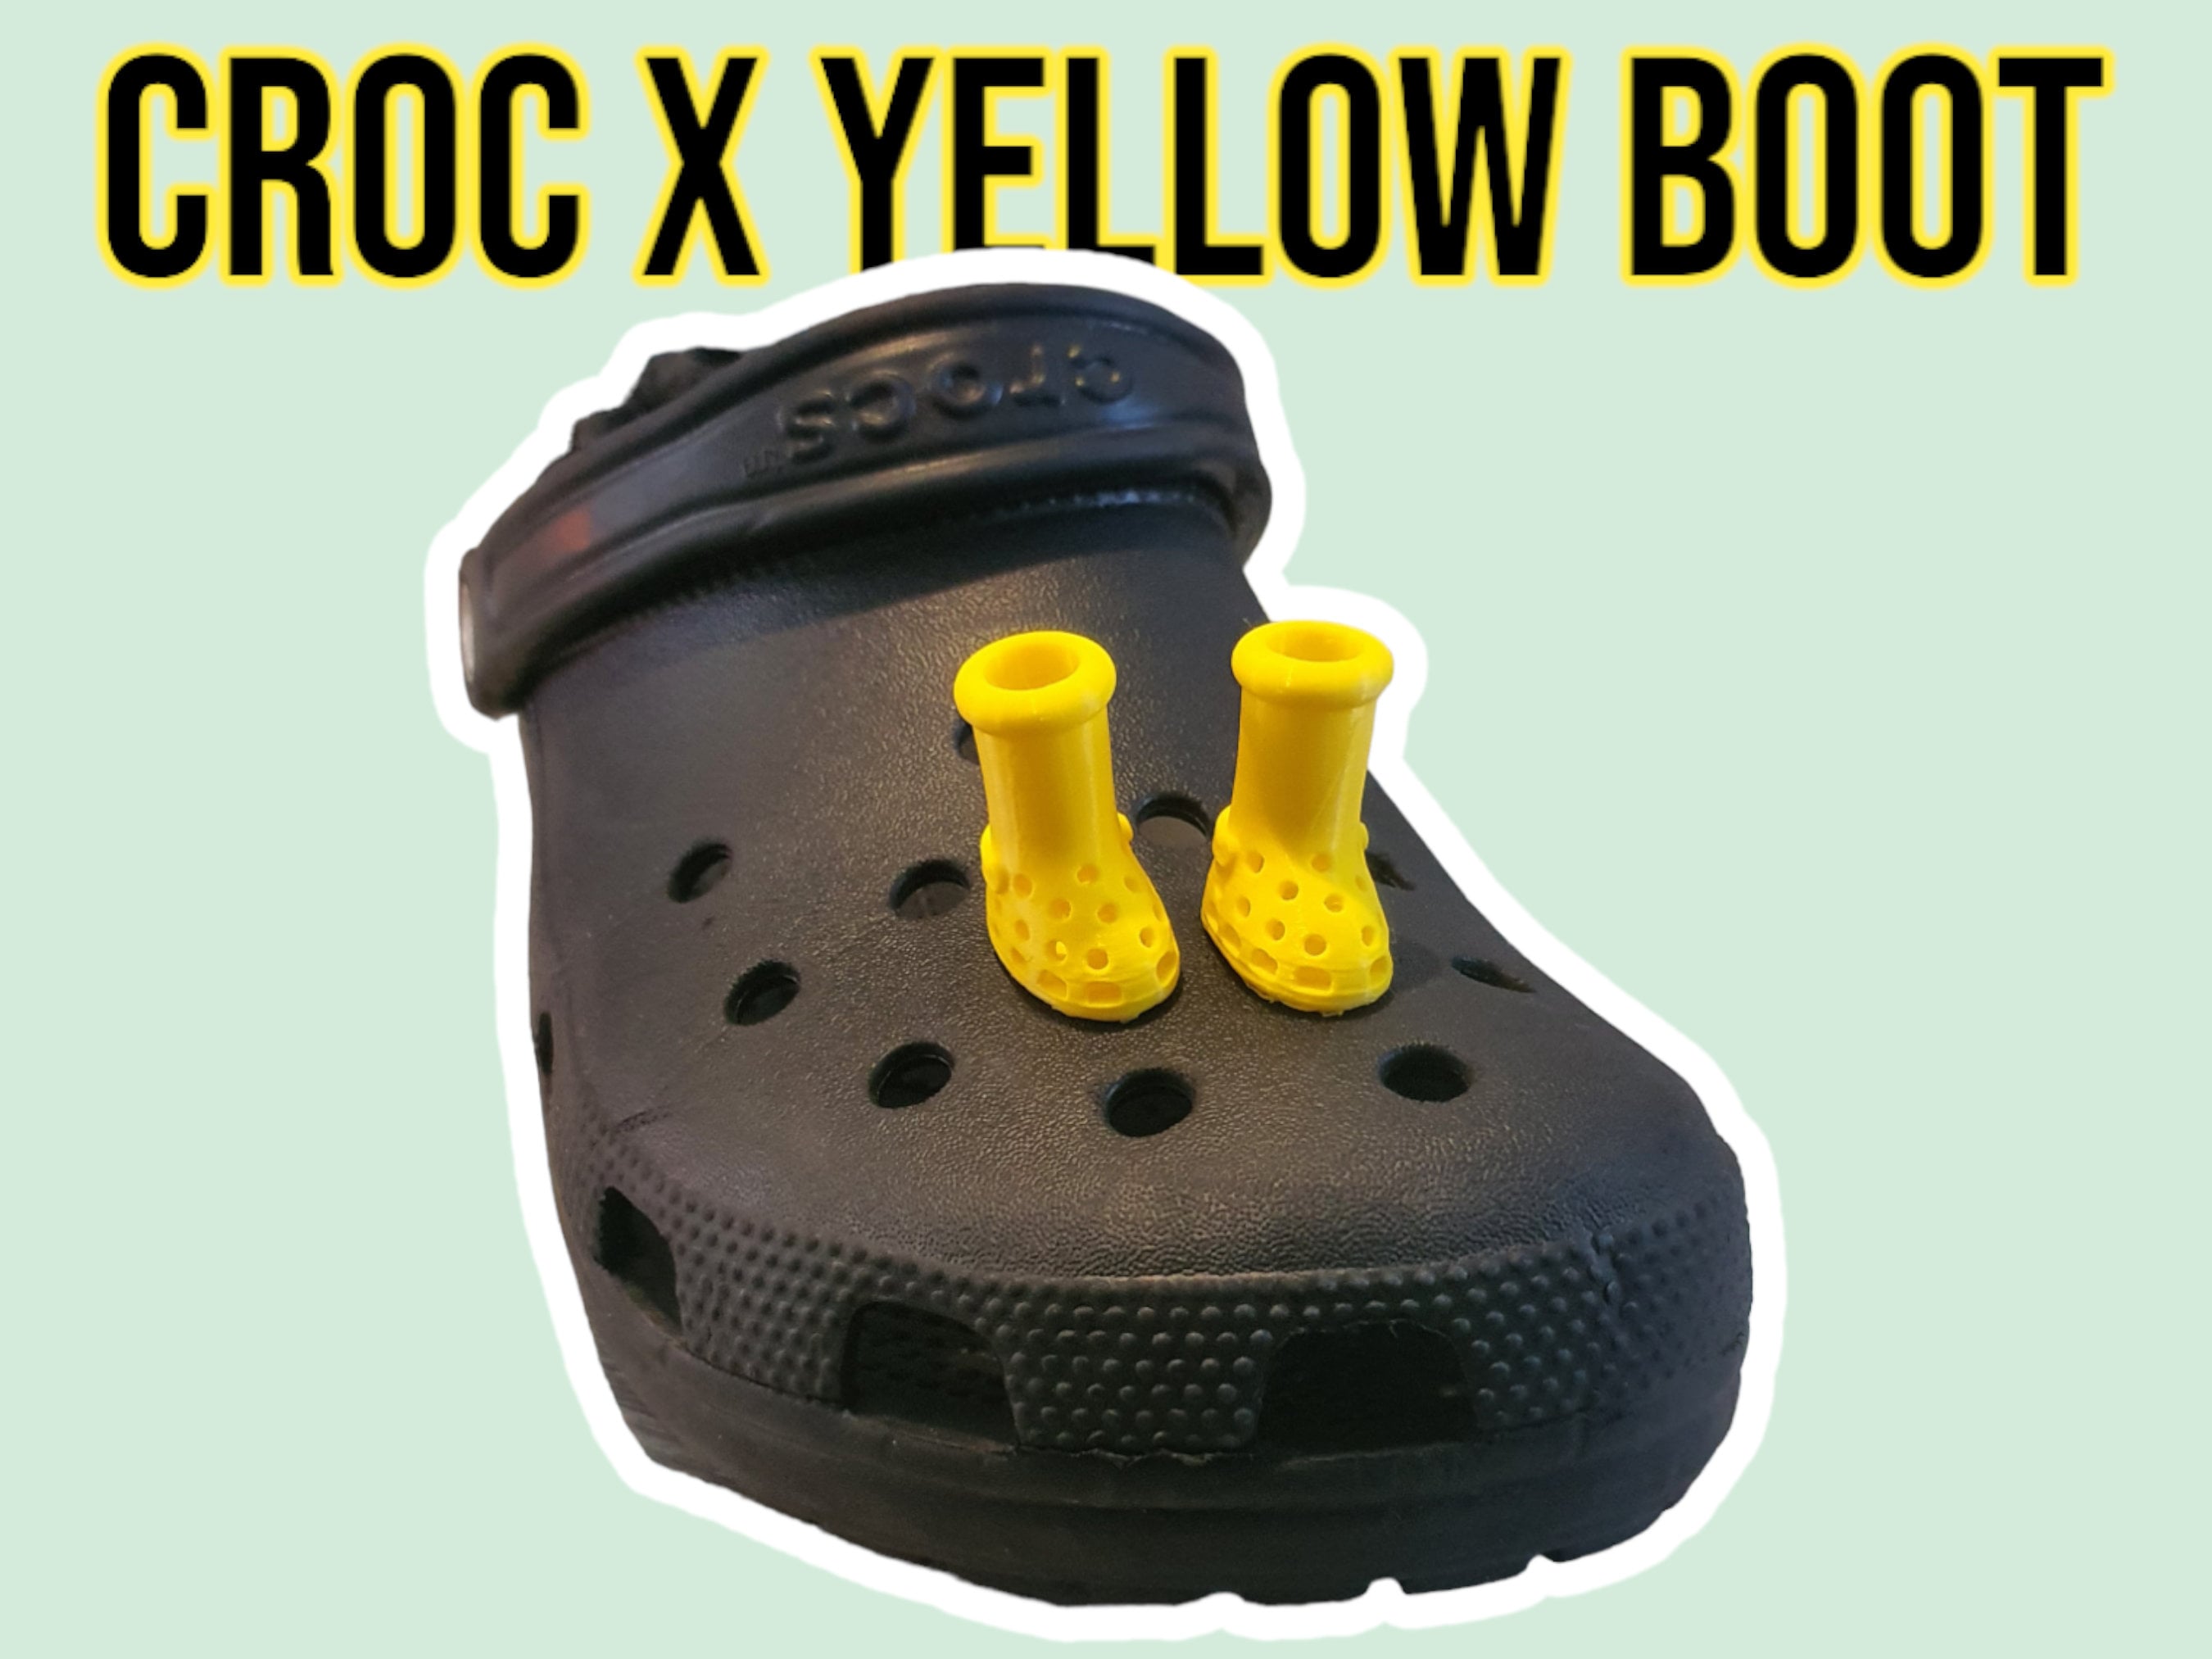 Mini Croc Shoe Charm Charms Compatible With Croc Shoes Fashion Croc Charms  Funny Fashion Accessories 